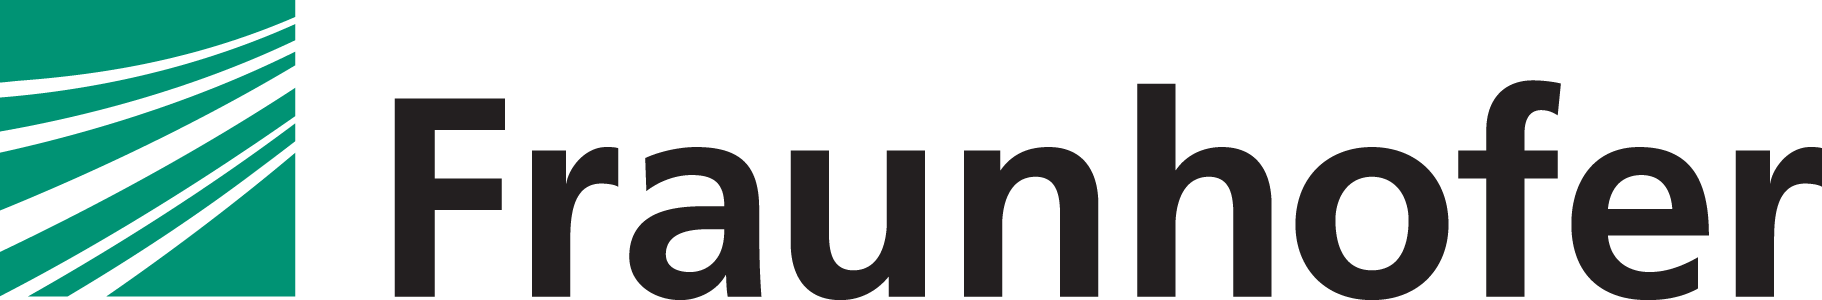 Fraunhofer-logo.png